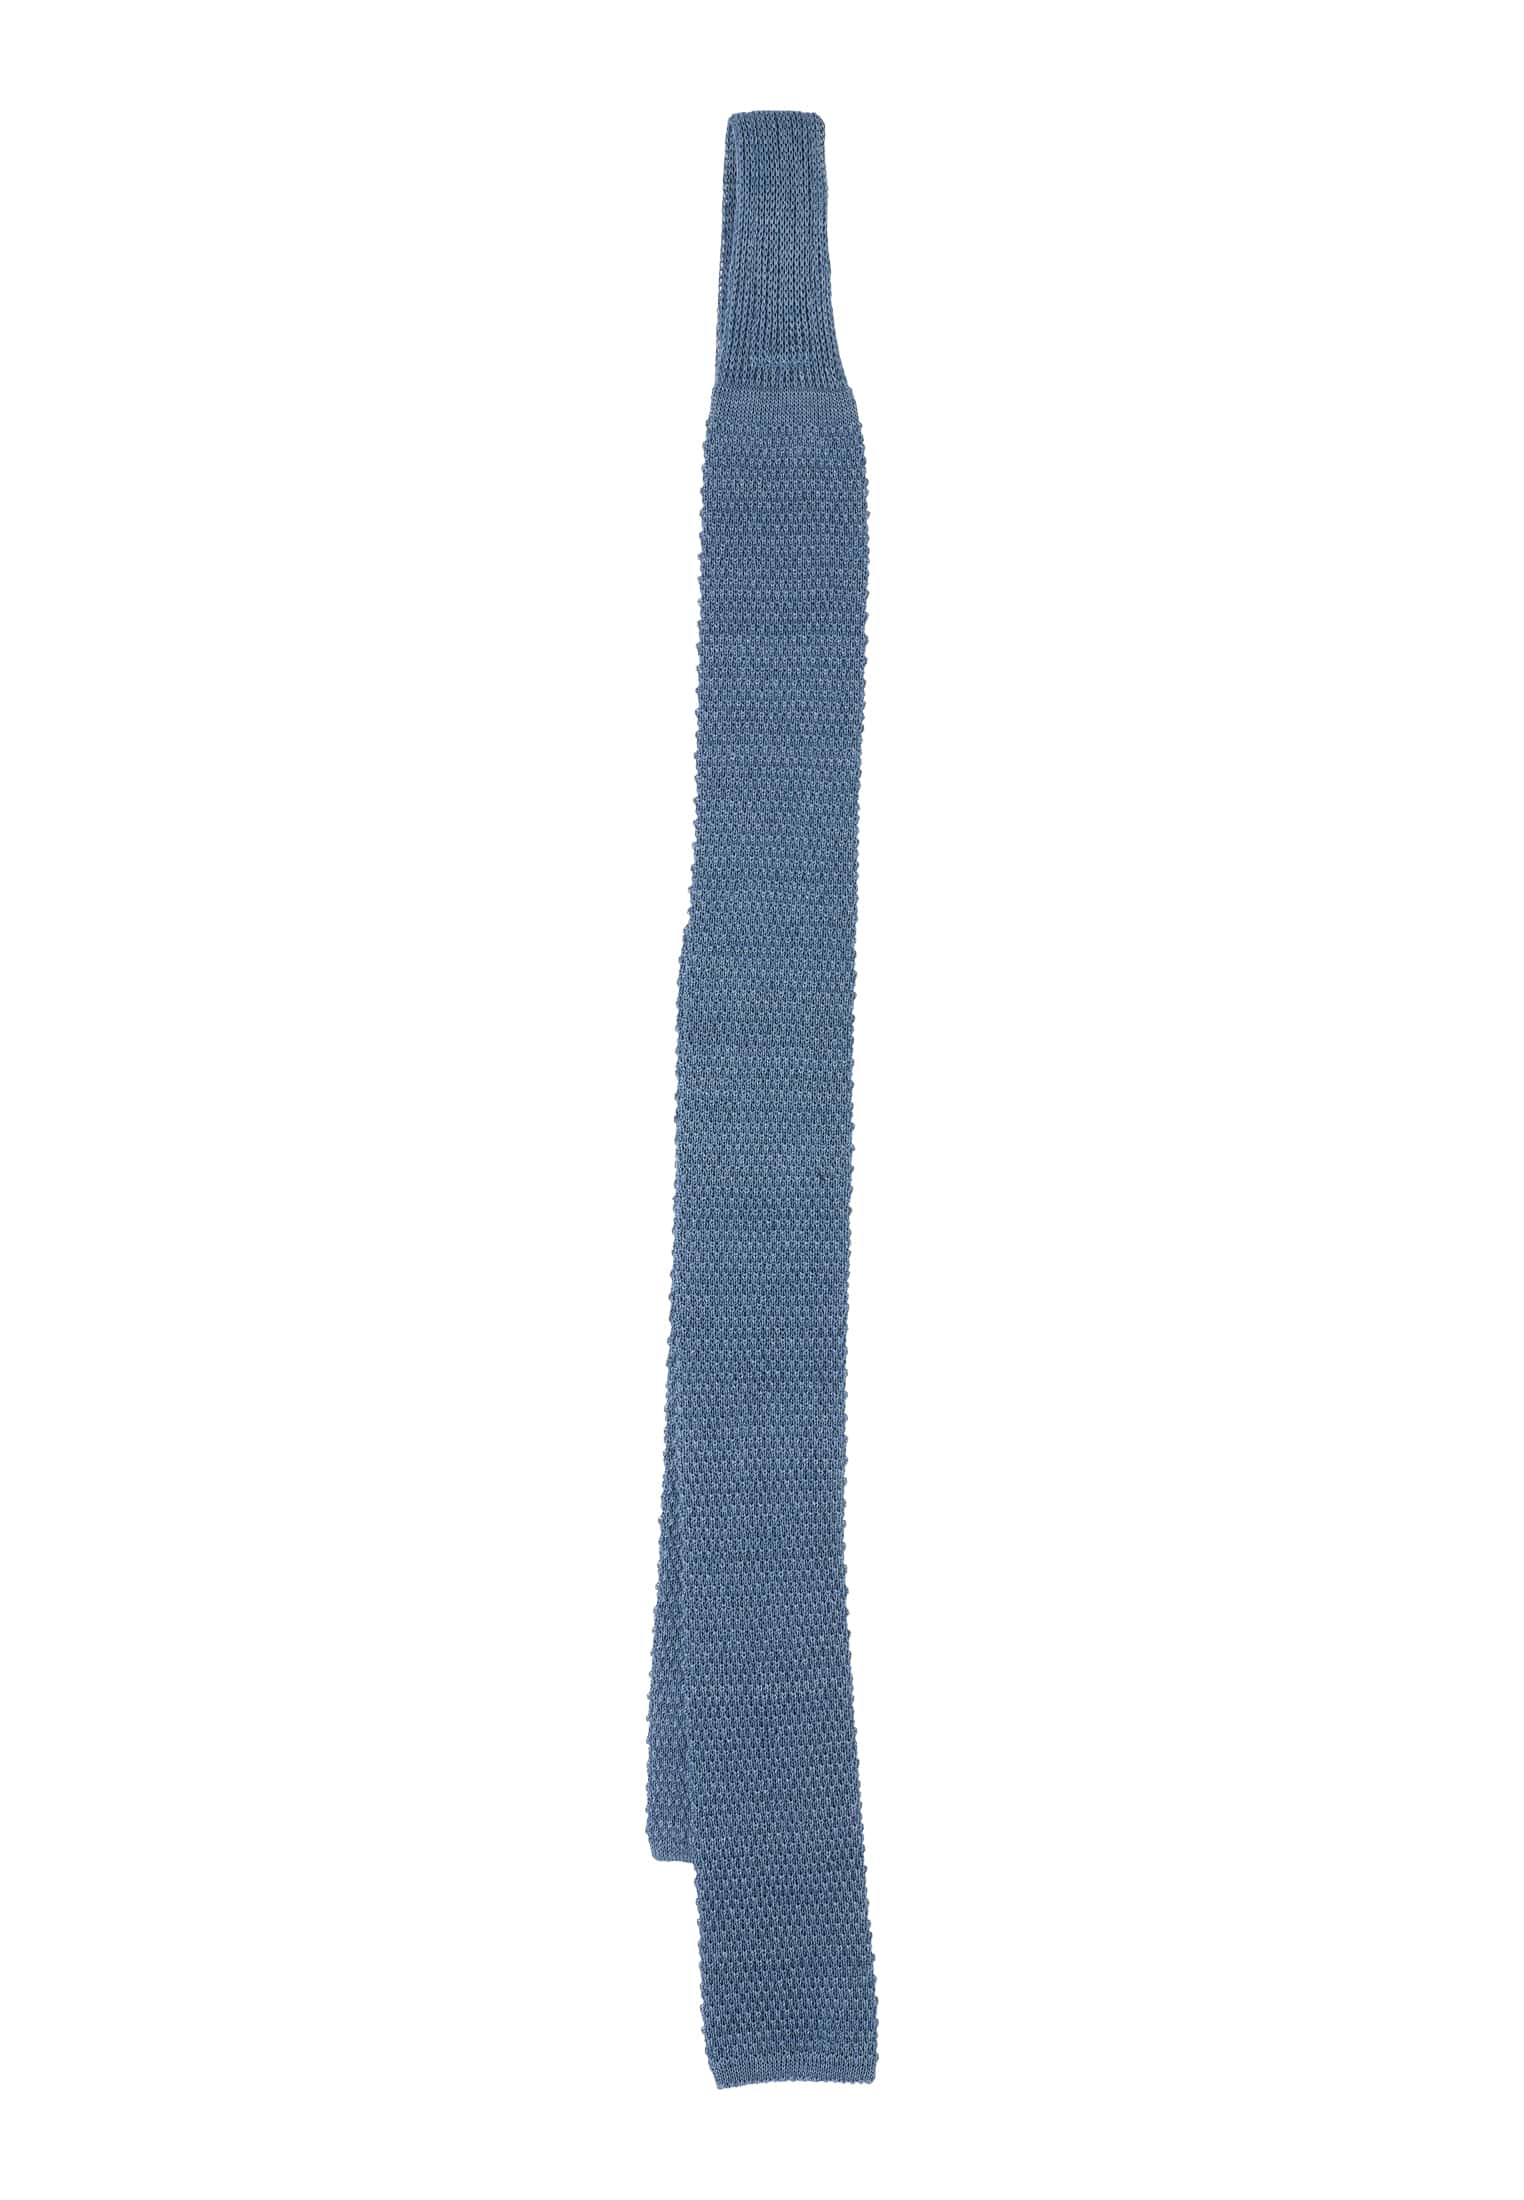 Krawatte in rauchblau unifarben | rauchblau | 142 | 1AC02004-01-62-142 | Breite Krawatten